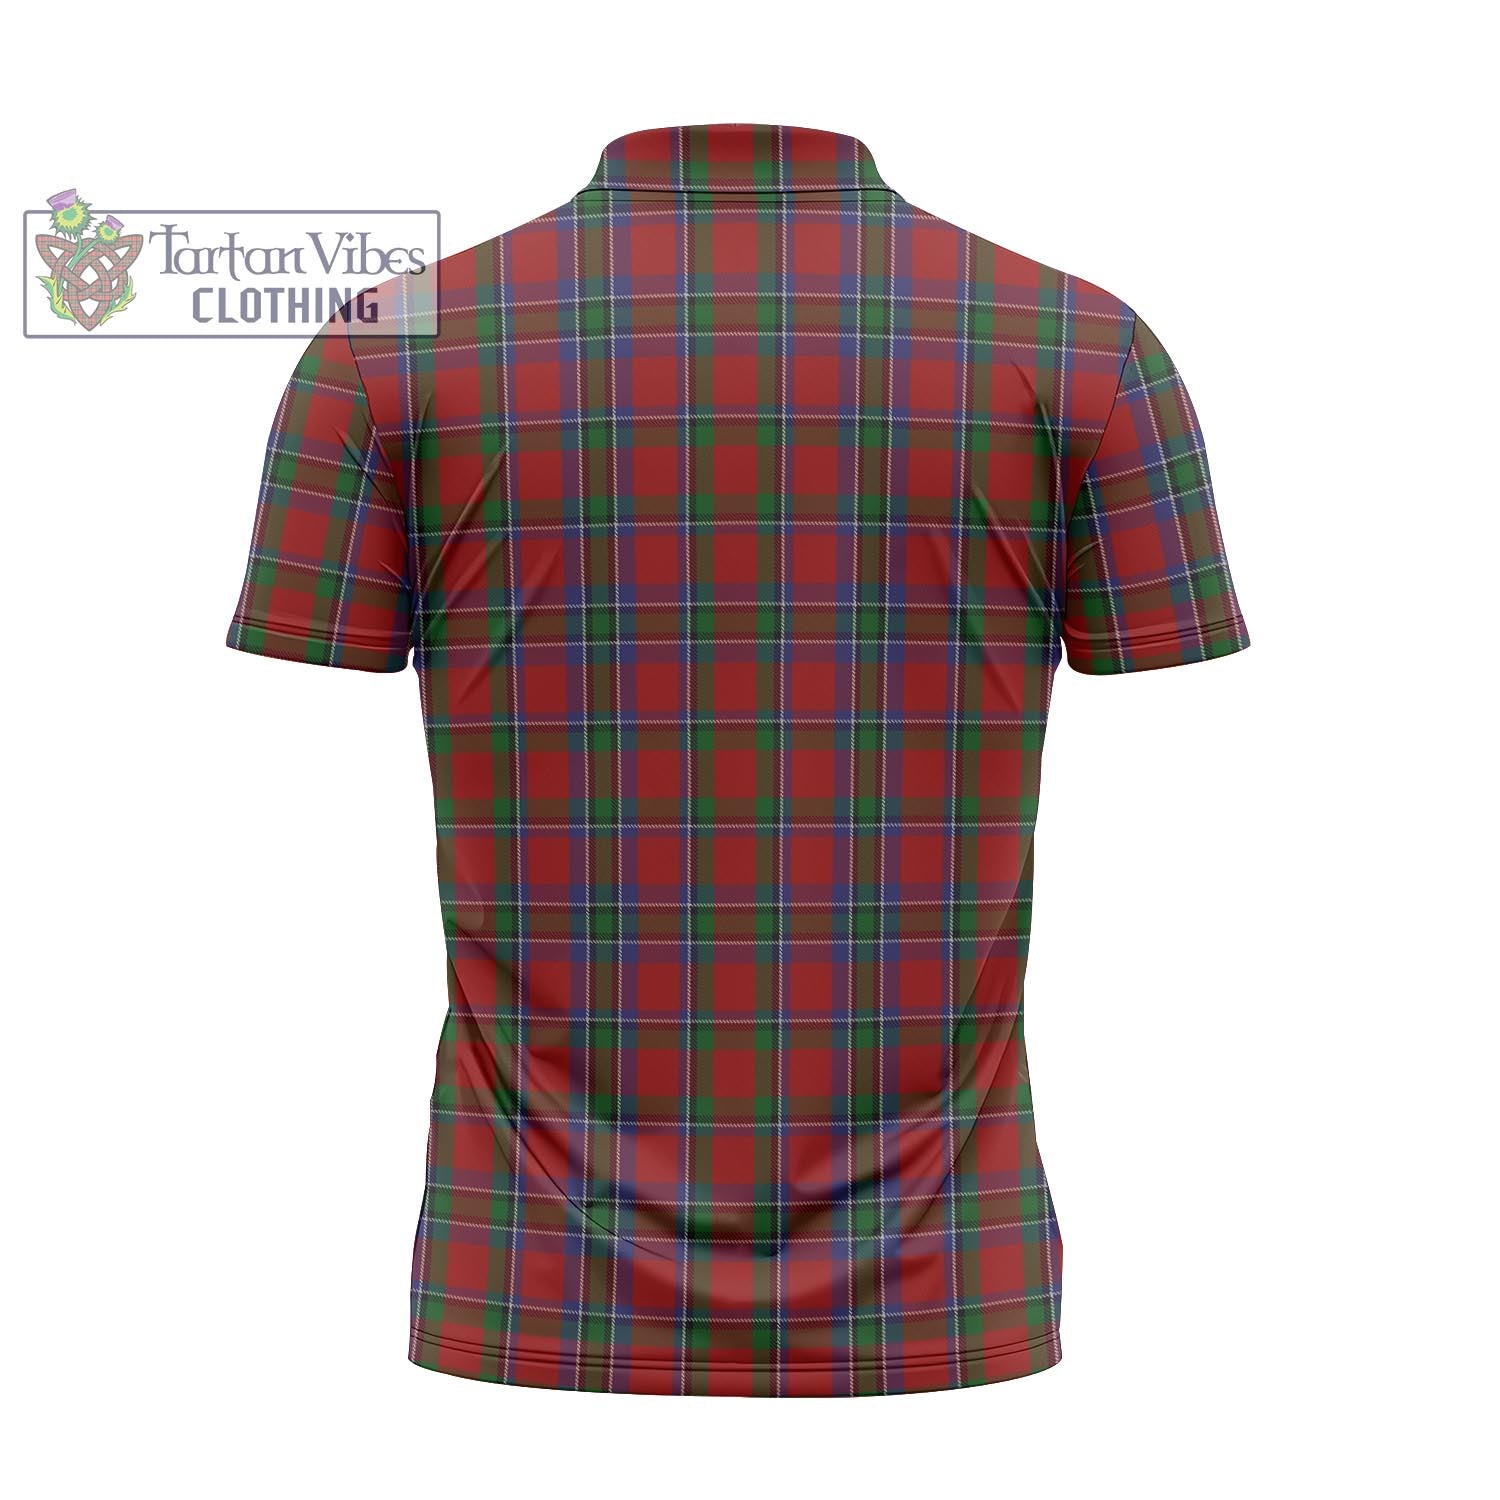 Tartan Vibes Clothing Sinclair Tartan Zipper Polo Shirt with Family Crest